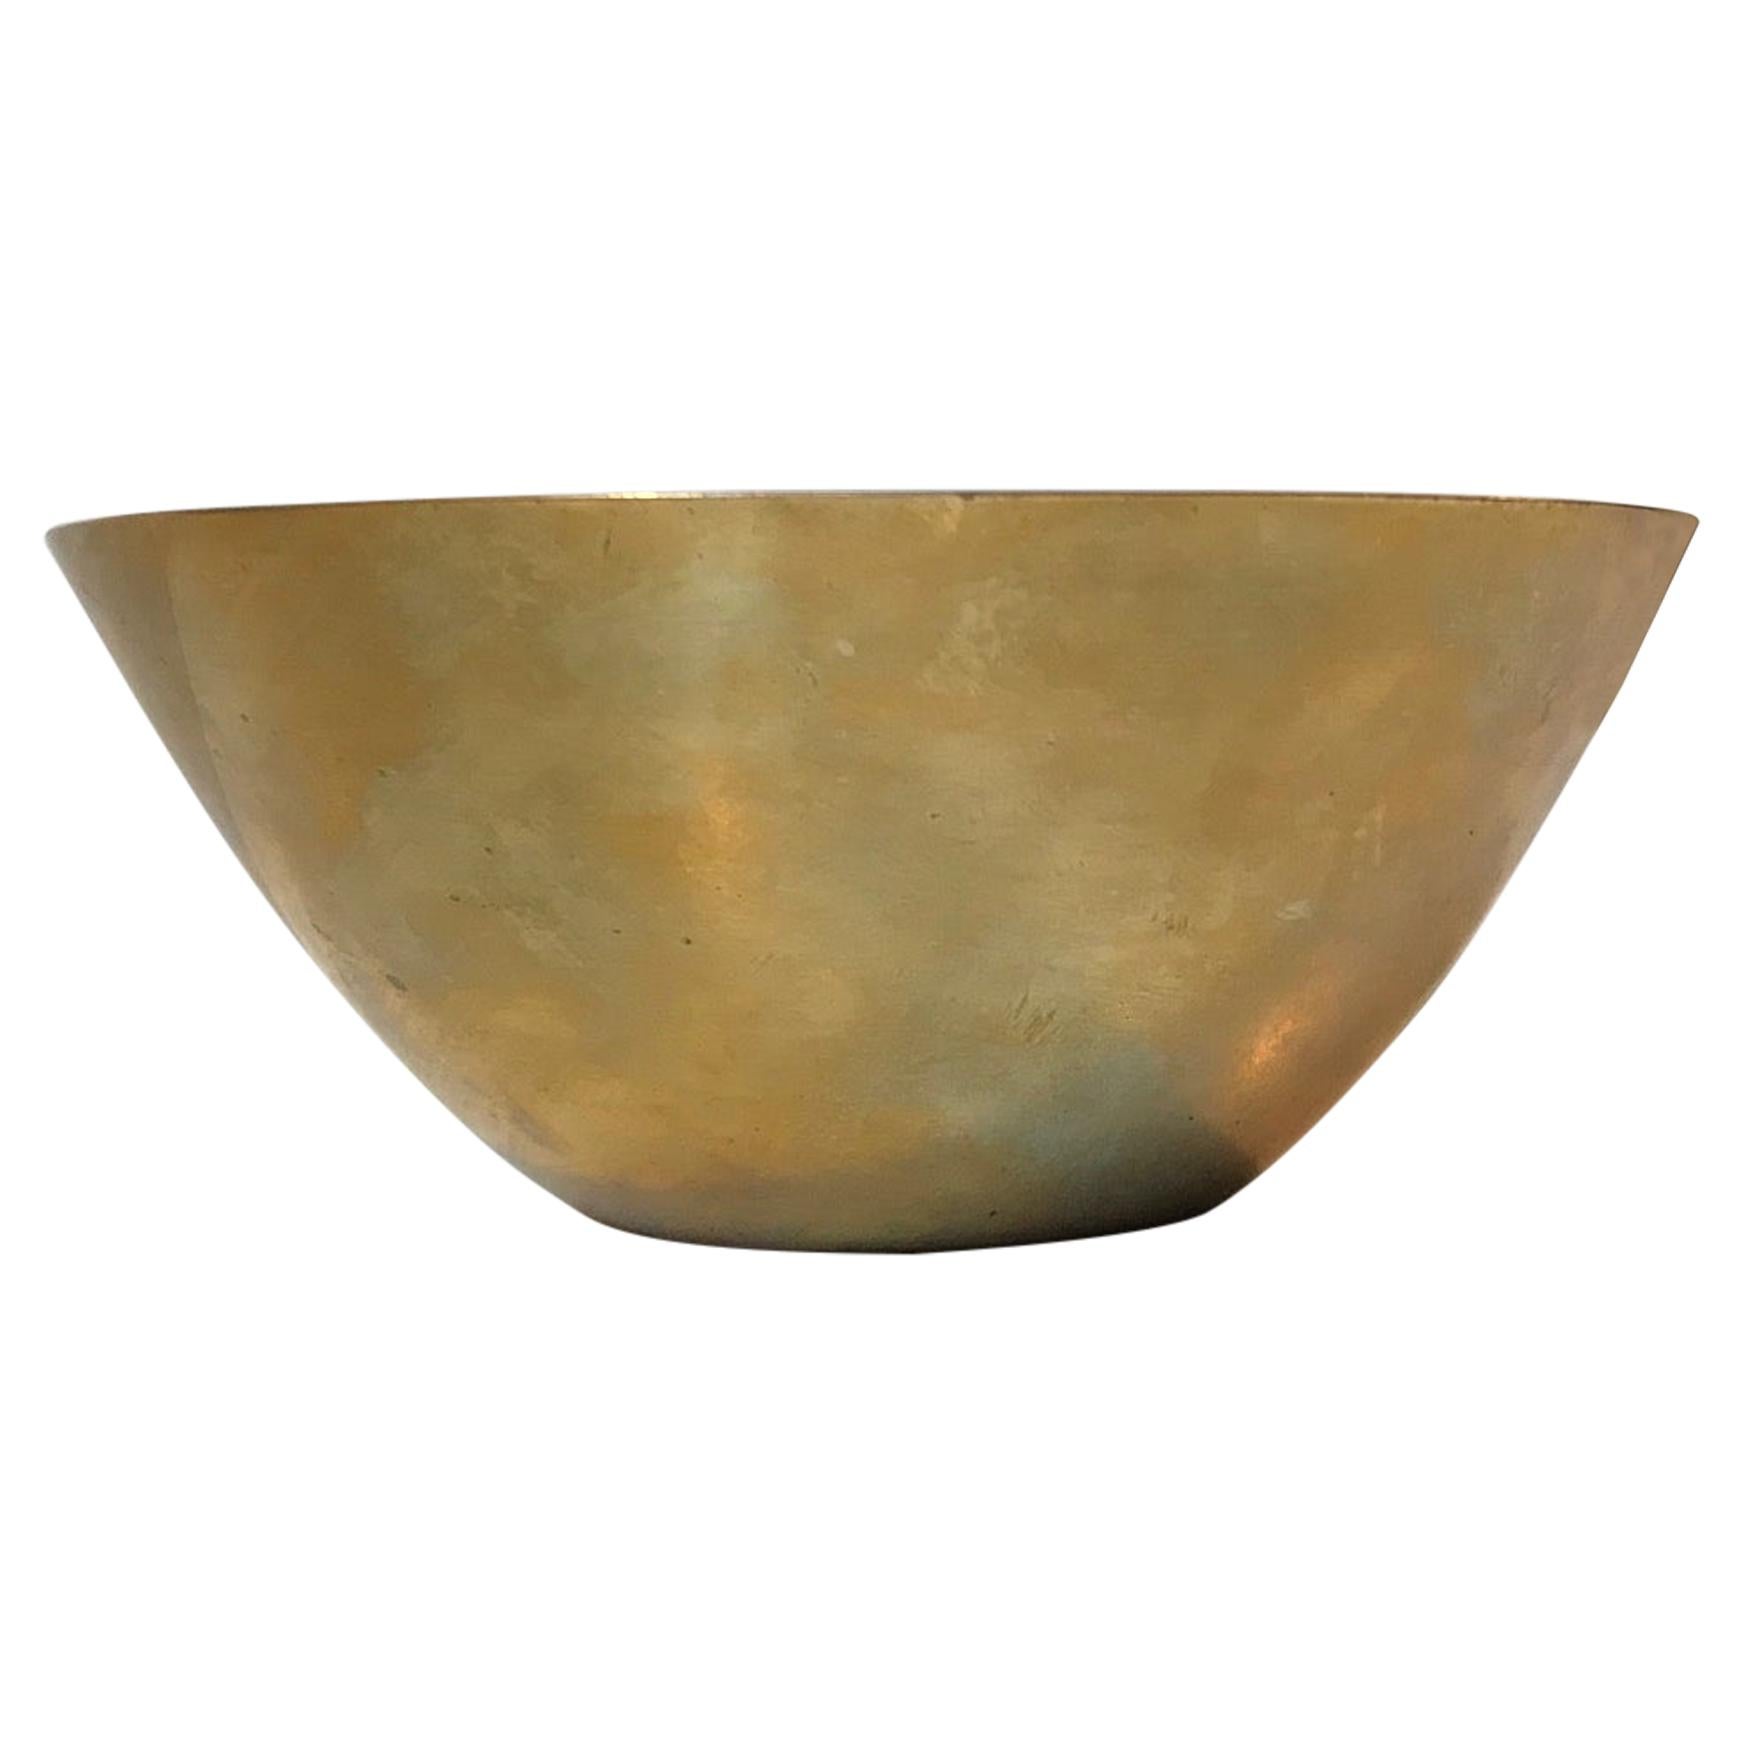 Rare Brass Bowl by Arne Jacobsen, Limited Brassware, for Stelton, 1960s